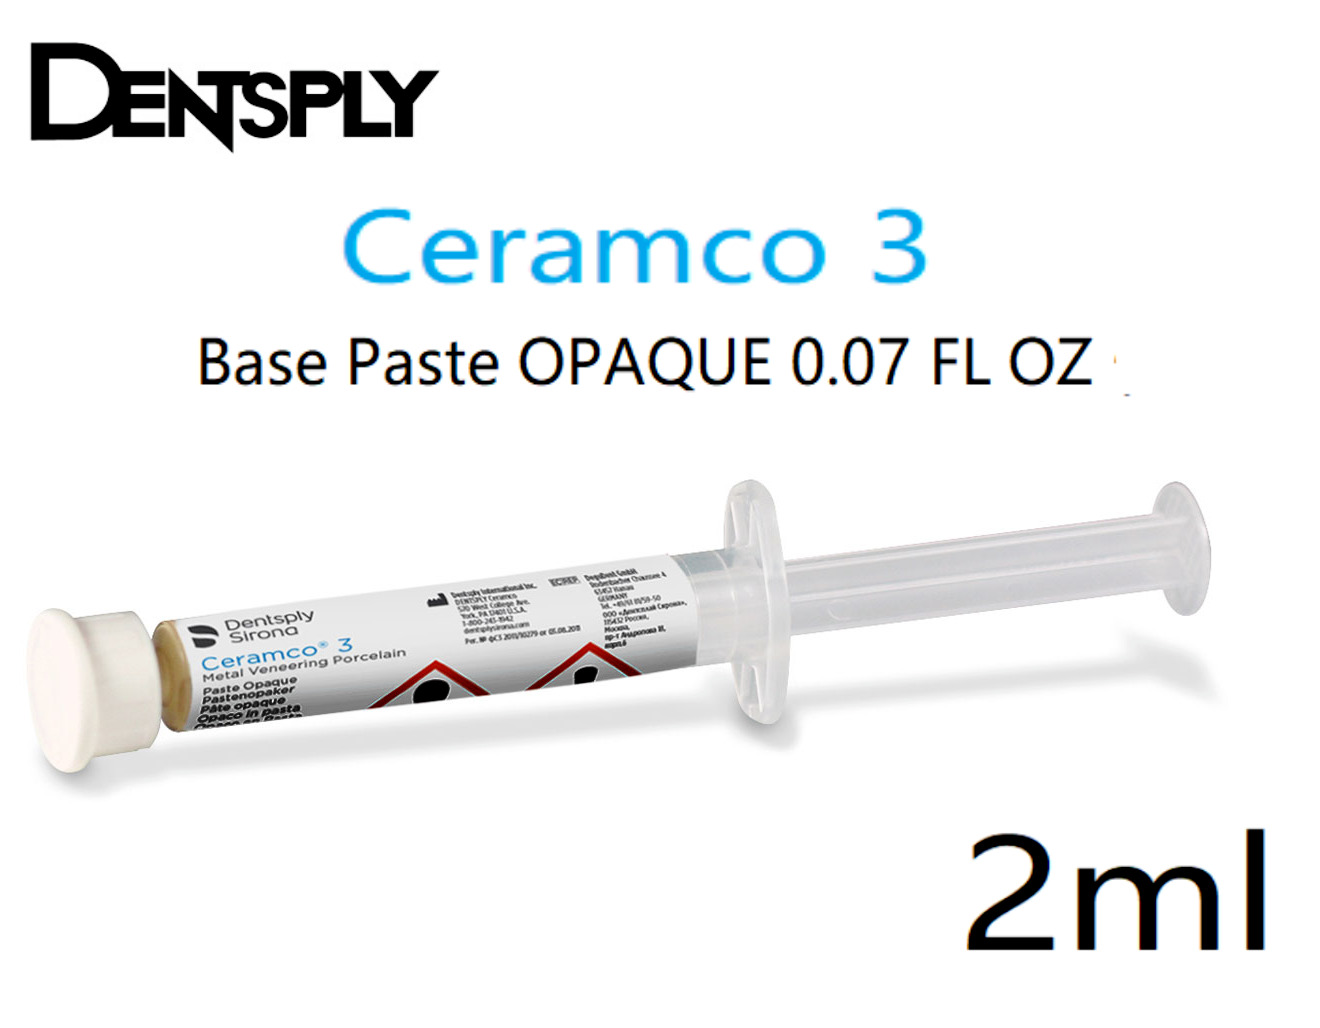 5 x Dental Ceramco3 Base Paste Opaque 2ml 0.07fl oz. by DENTSPLY SIRONA